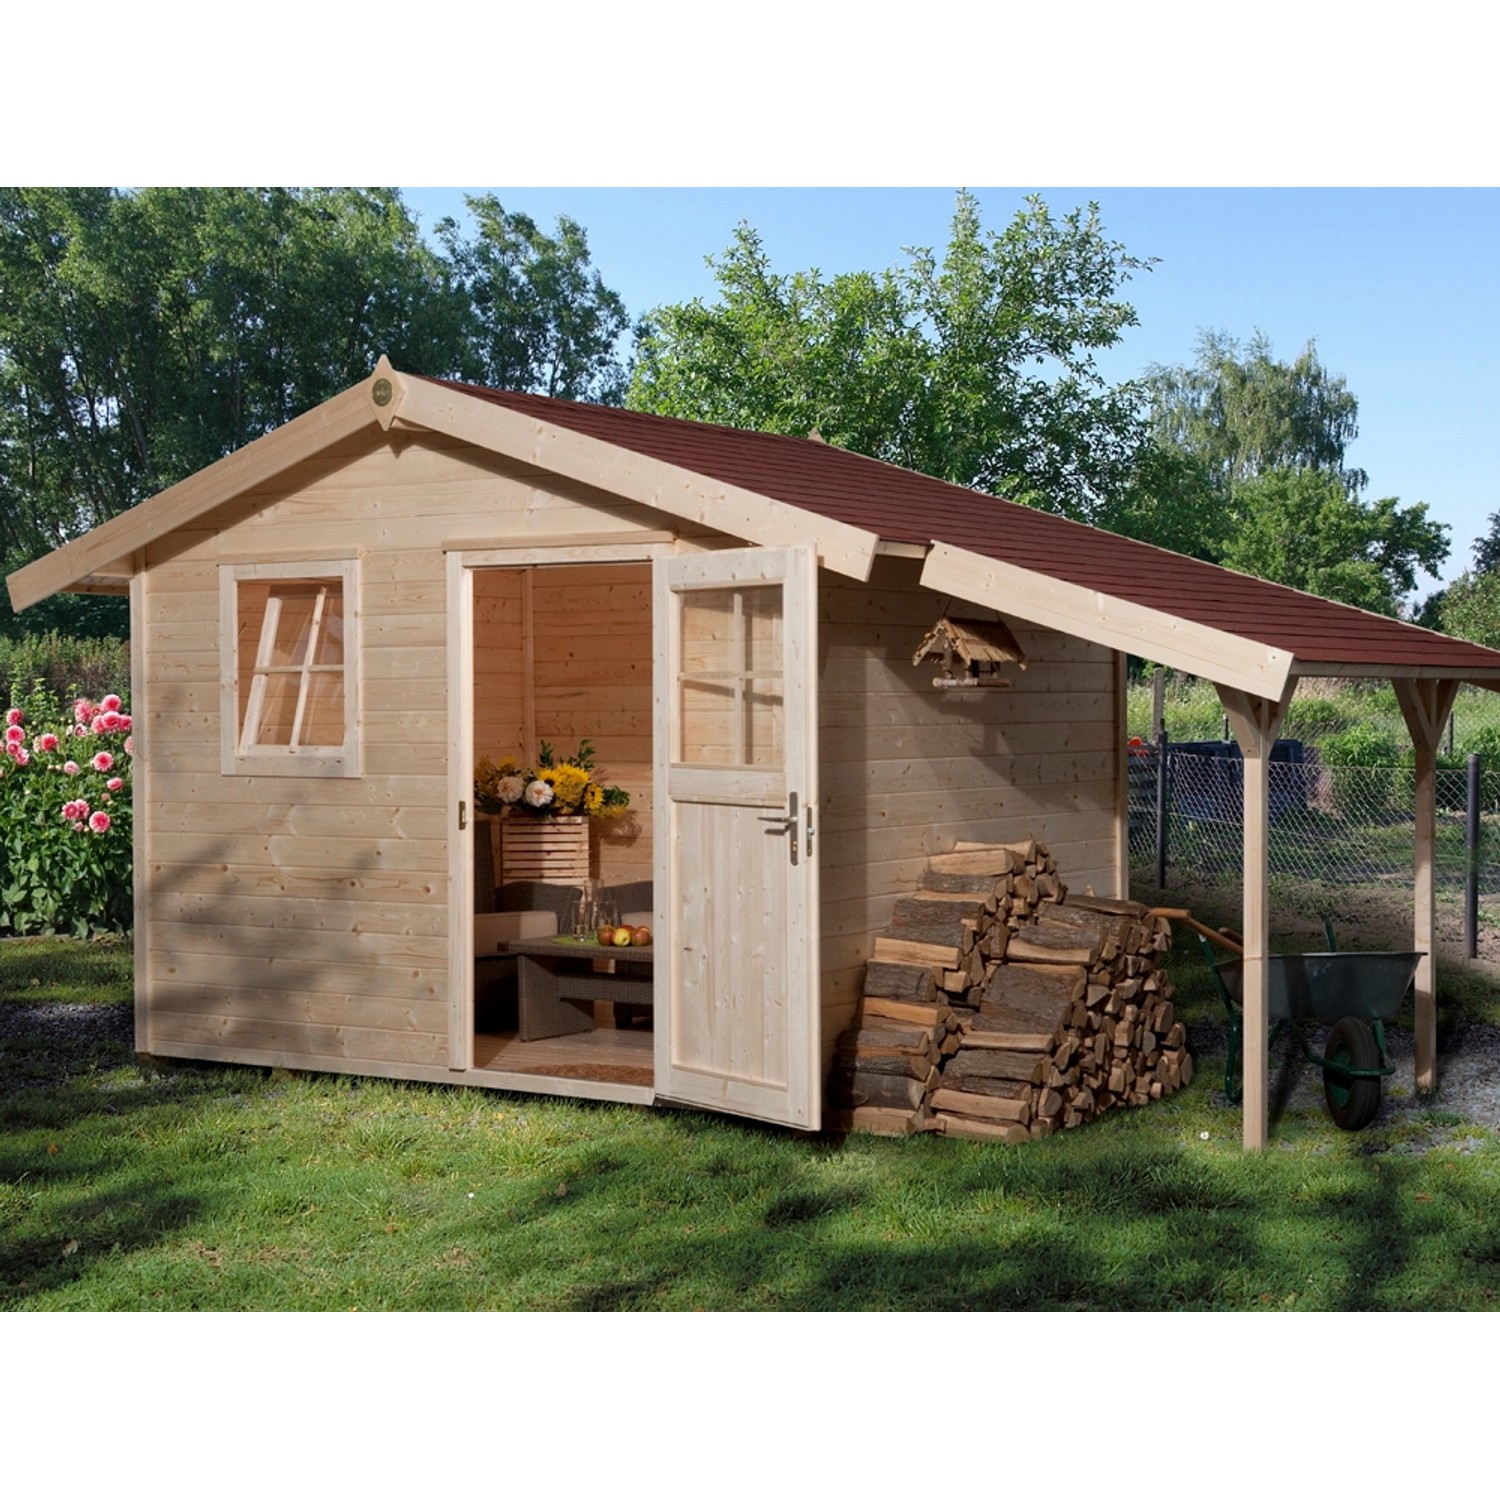 OBI Outdoor Living Holz-Gartenhaus Bozen Satteldach Unbehandelt 235 cm von OBI Outdoor Living